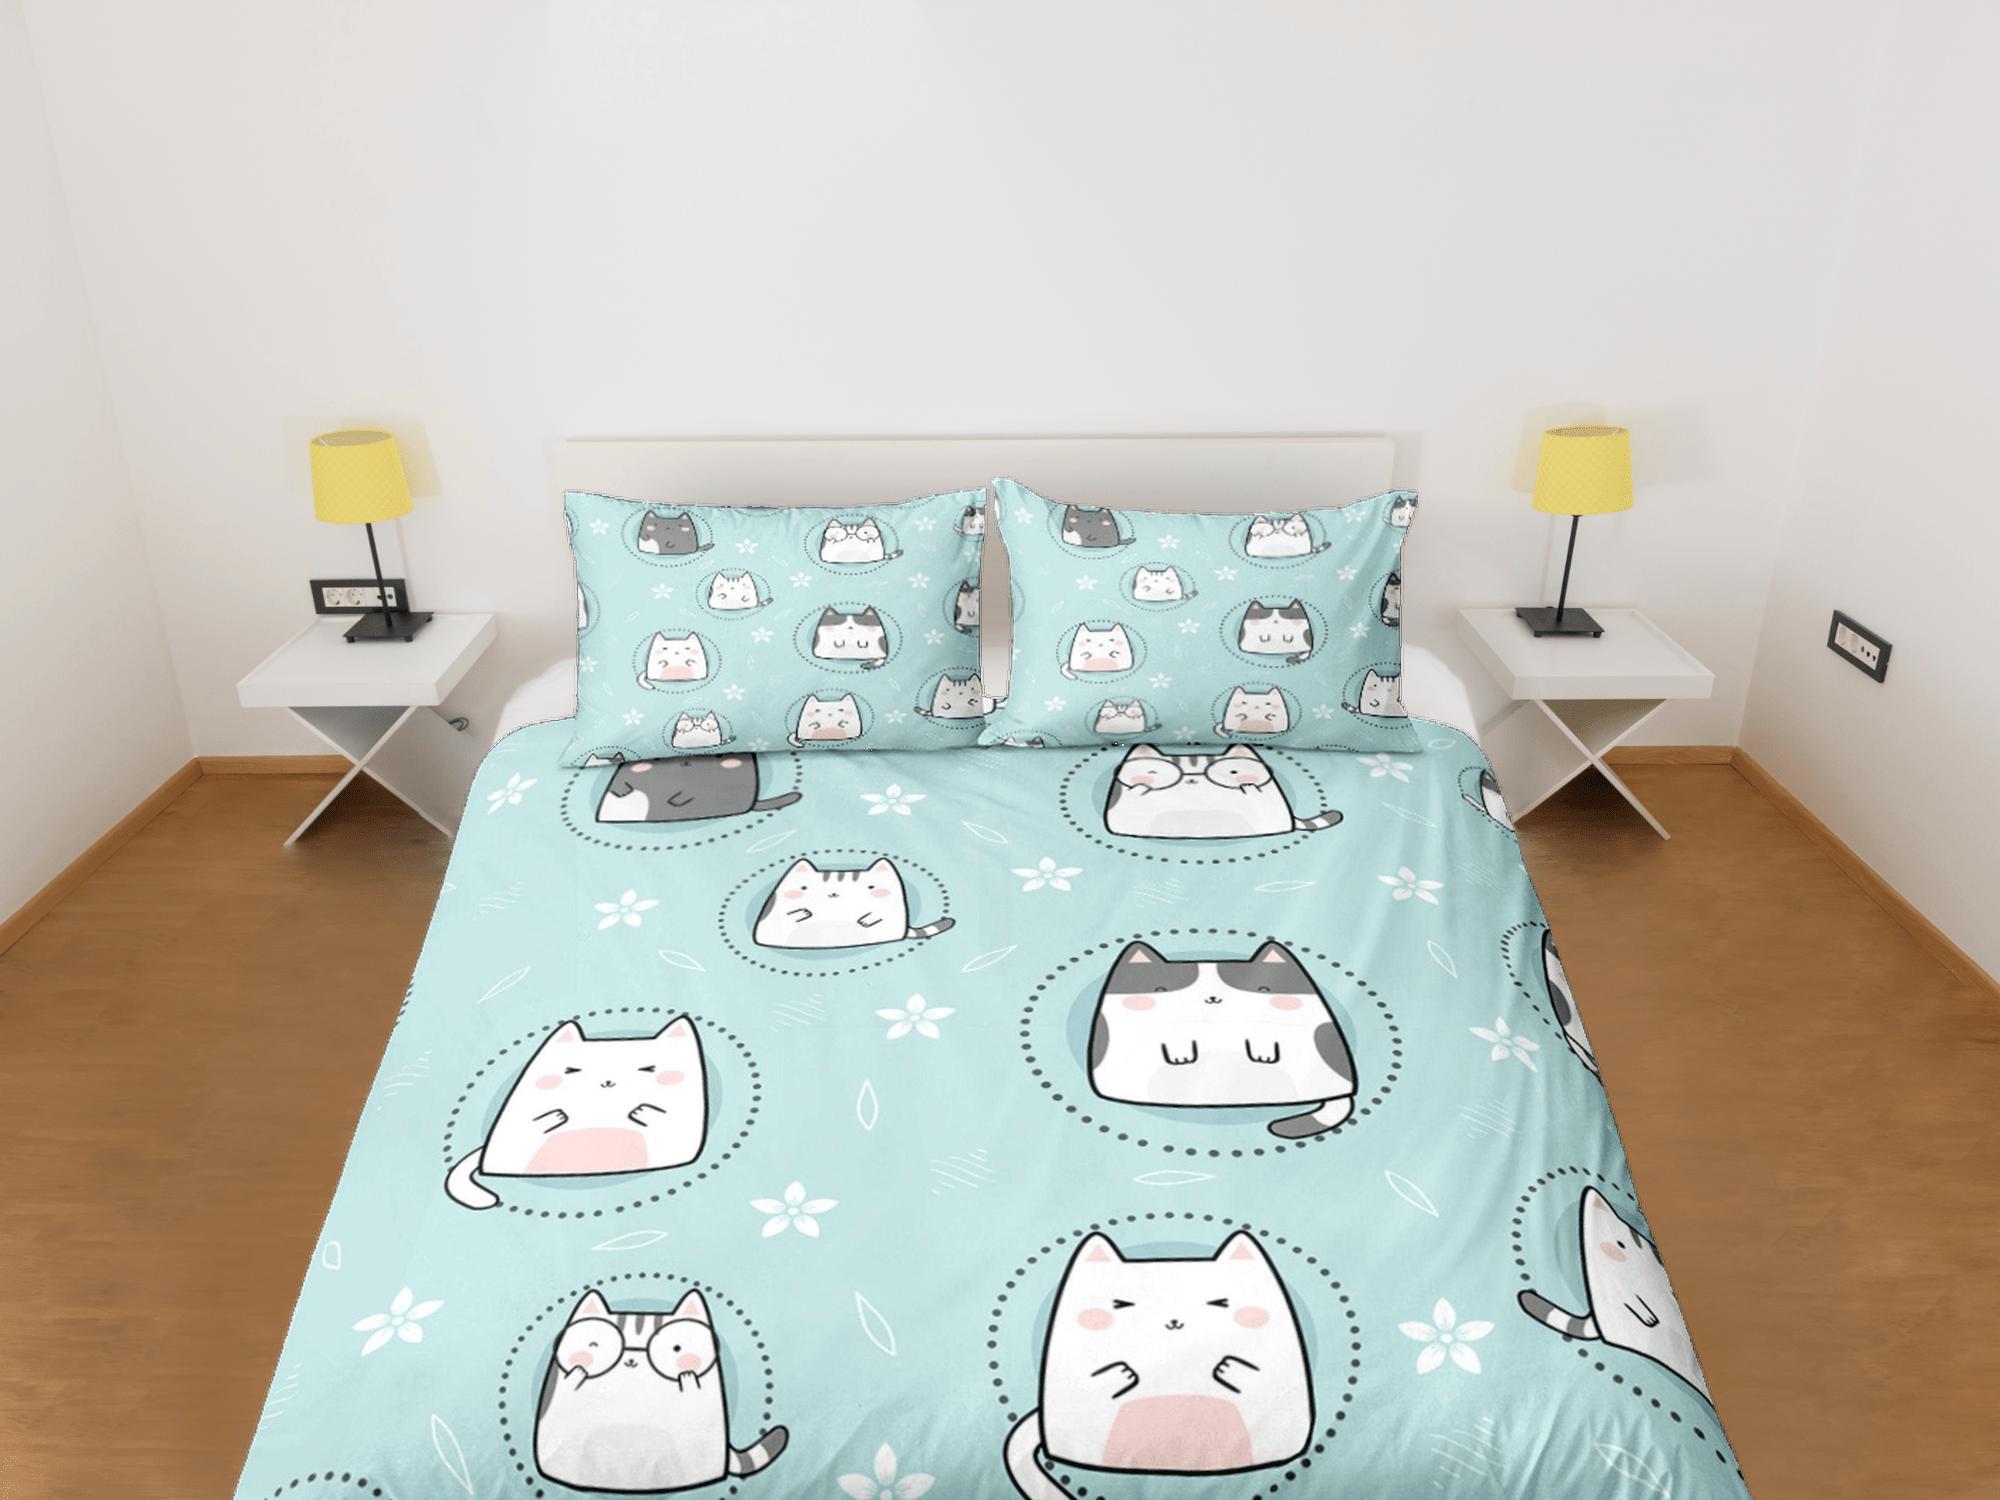 daintyduvet Cat Lover Duvet Cover Set Bedspread, Cute Cats Green Bedding for Teens Kids Bedroom